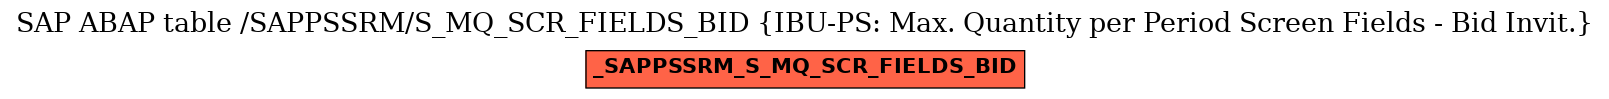 E-R Diagram for table /SAPPSSRM/S_MQ_SCR_FIELDS_BID (IBU-PS: Max. Quantity per Period Screen Fields - Bid Invit.)